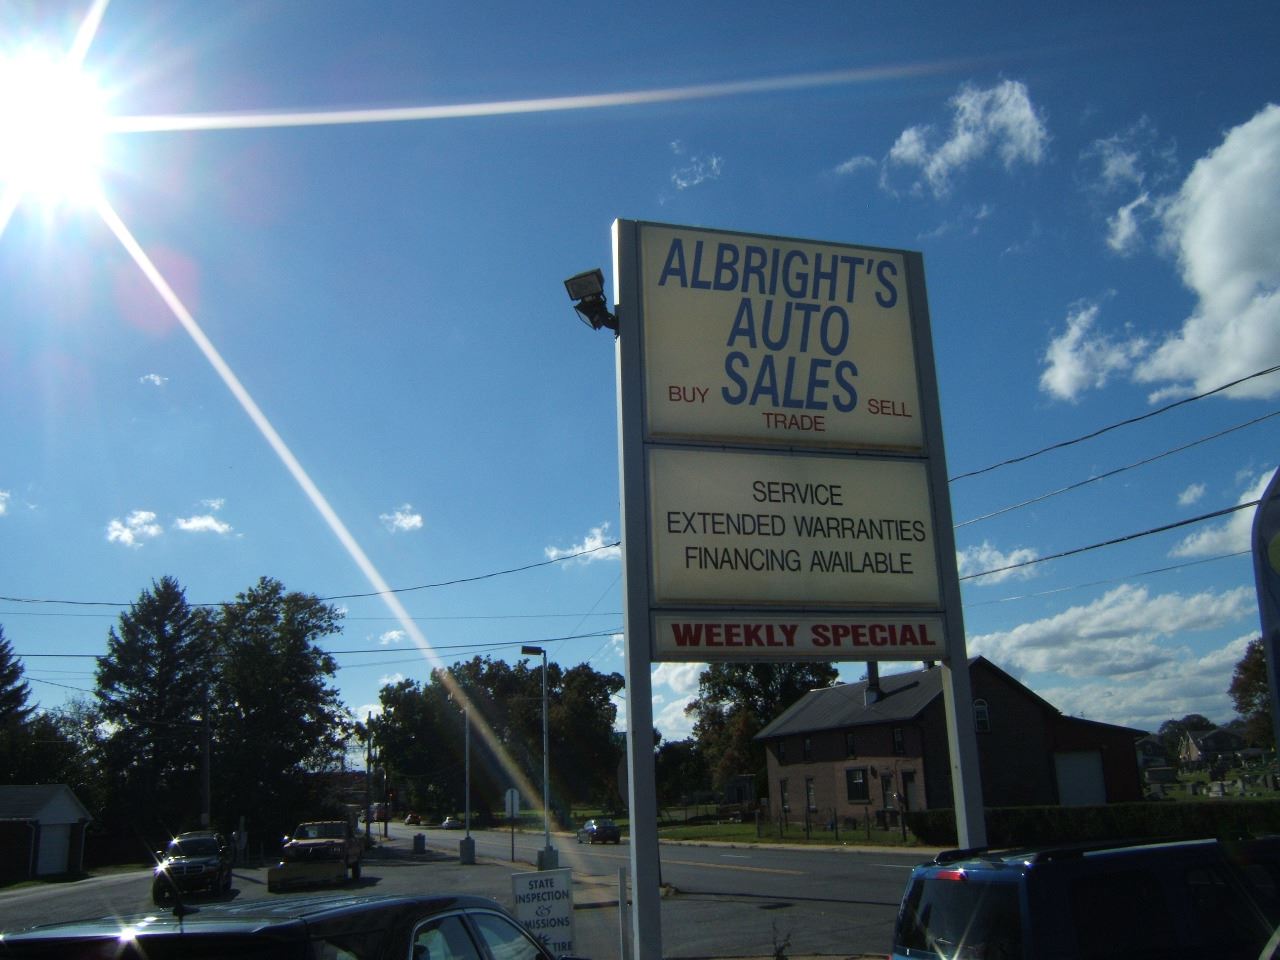 Albrights Auto Sales